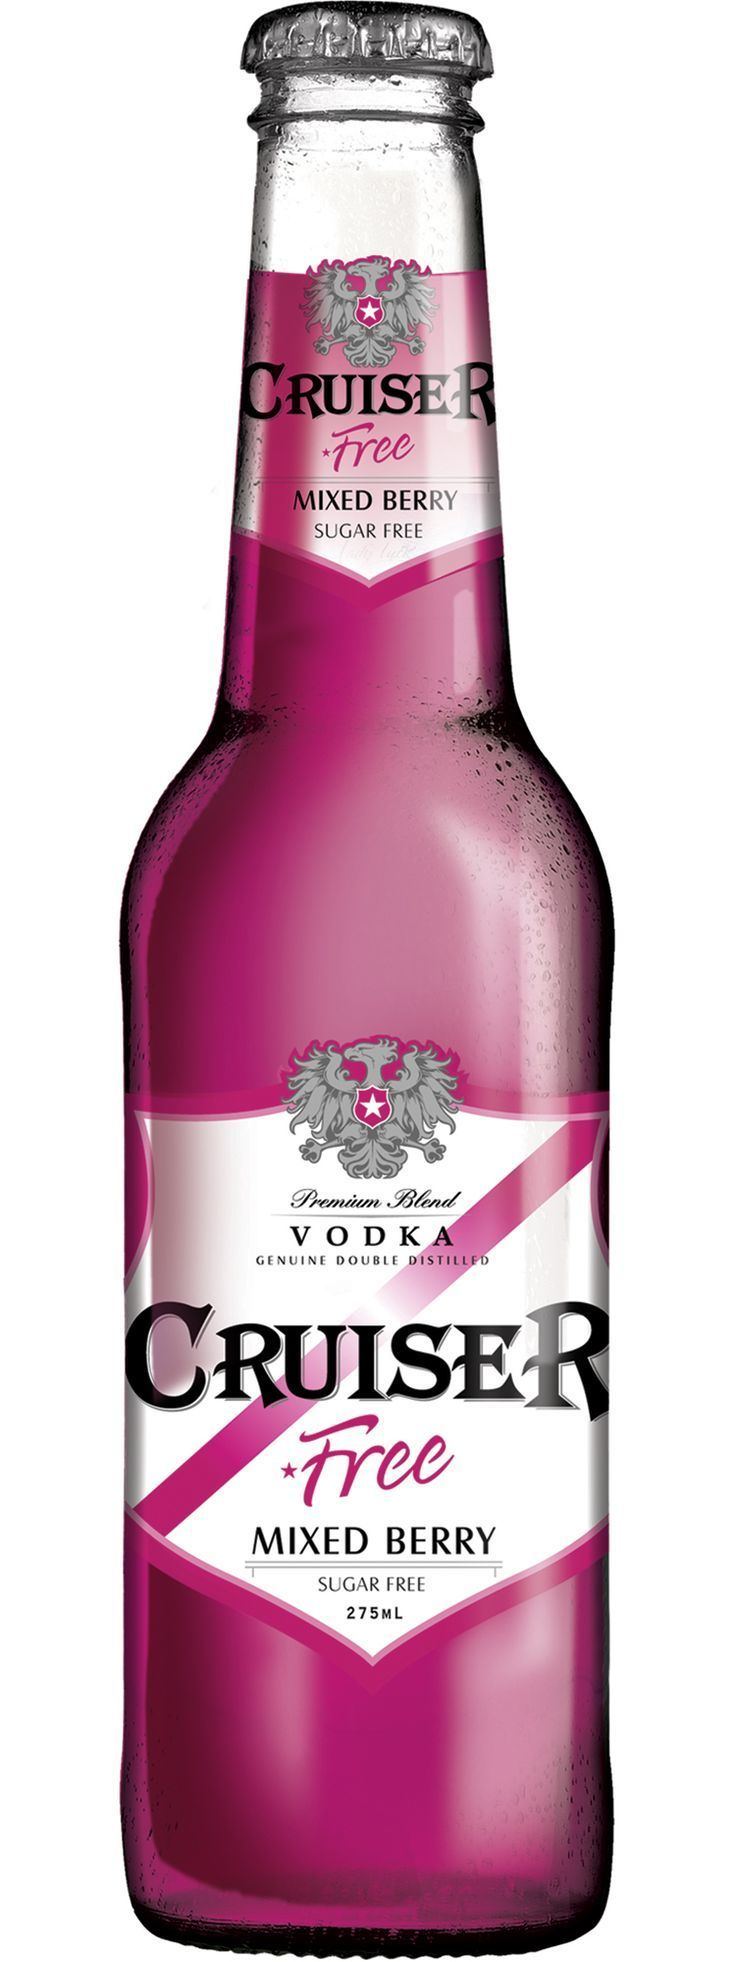 Vodka Cruiser httpssmediacacheak0pinimgcom736x1c3b24